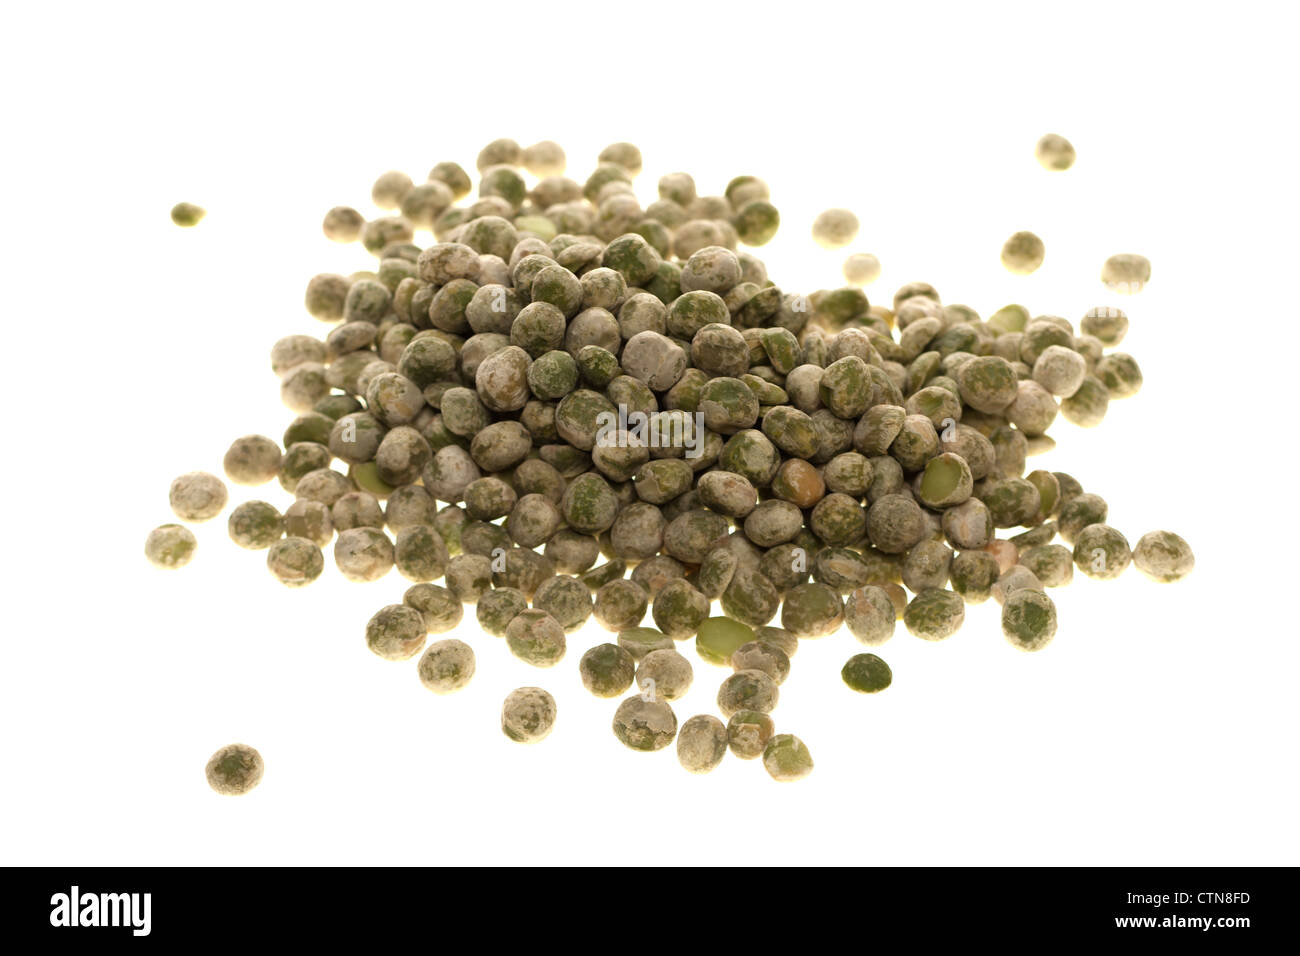 Pile of dried peas Stock Photo